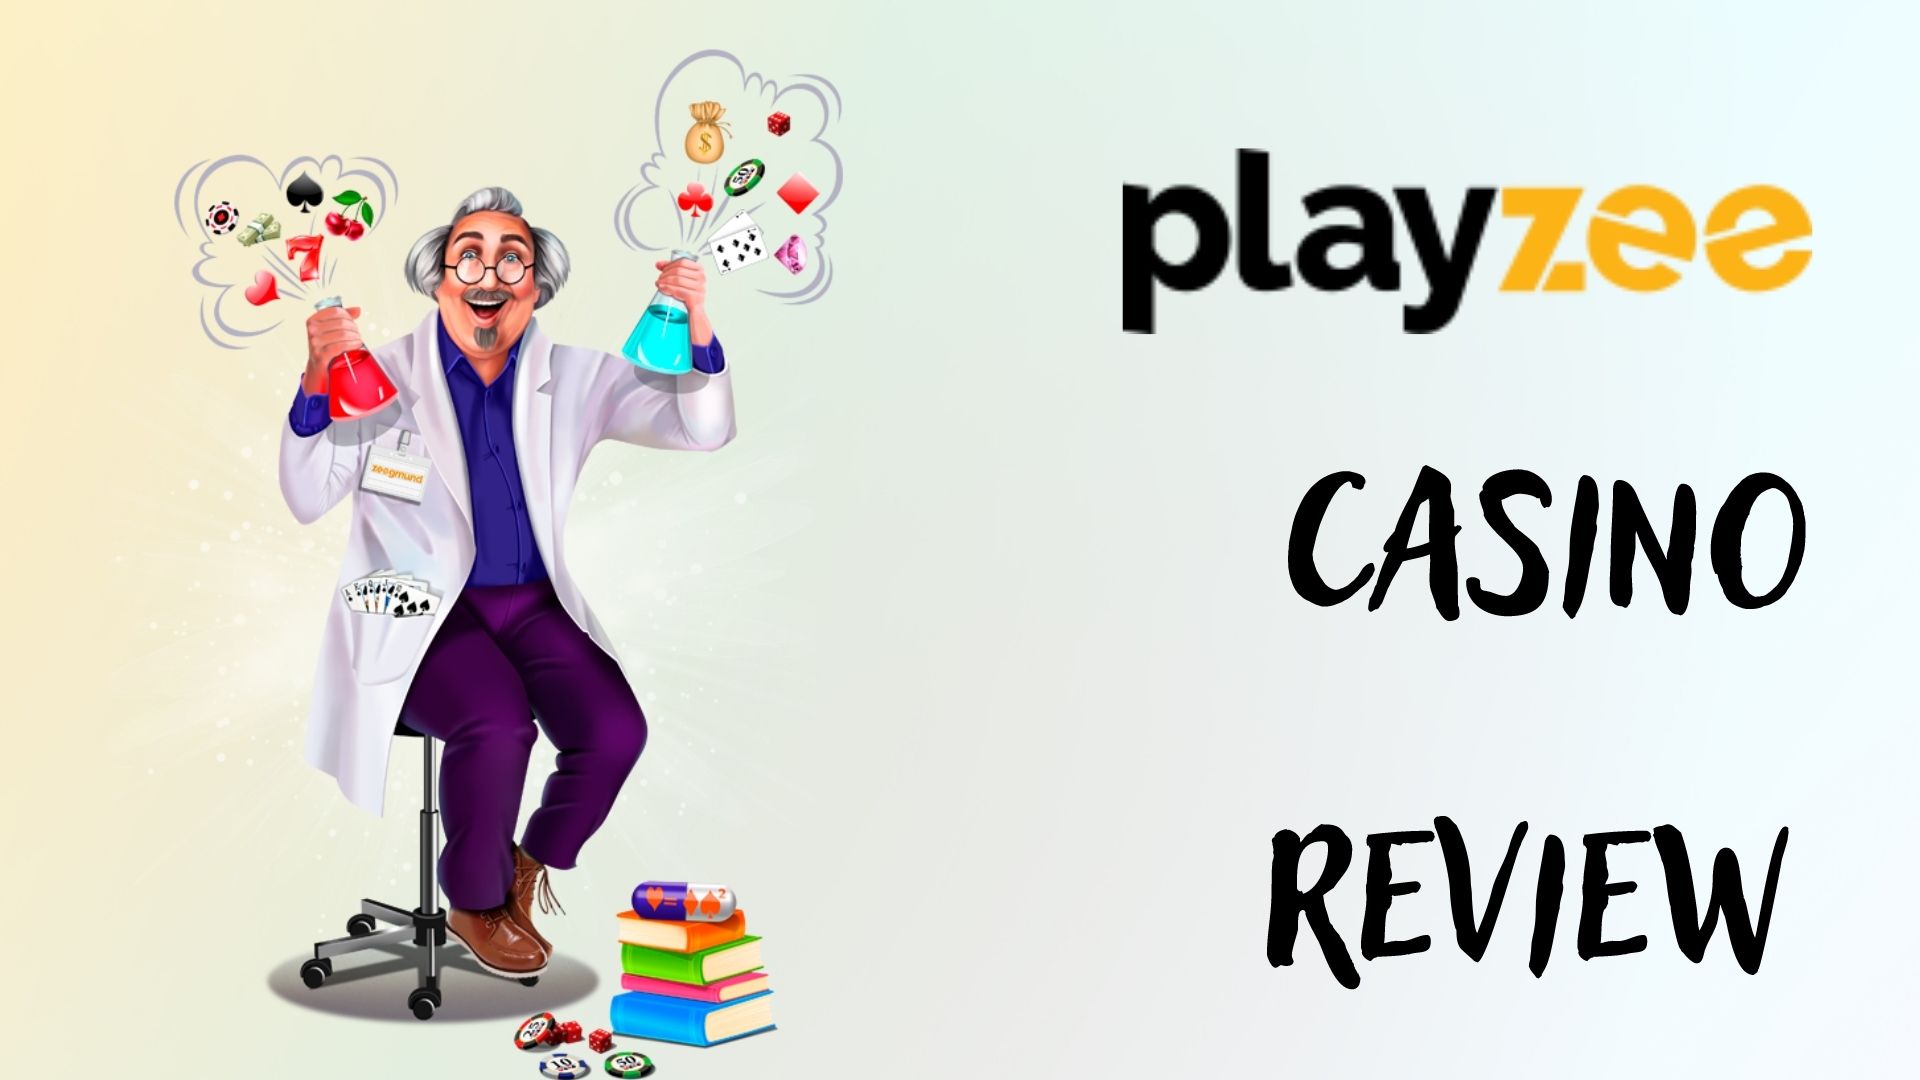 PlayZee Online Casino Review 2022